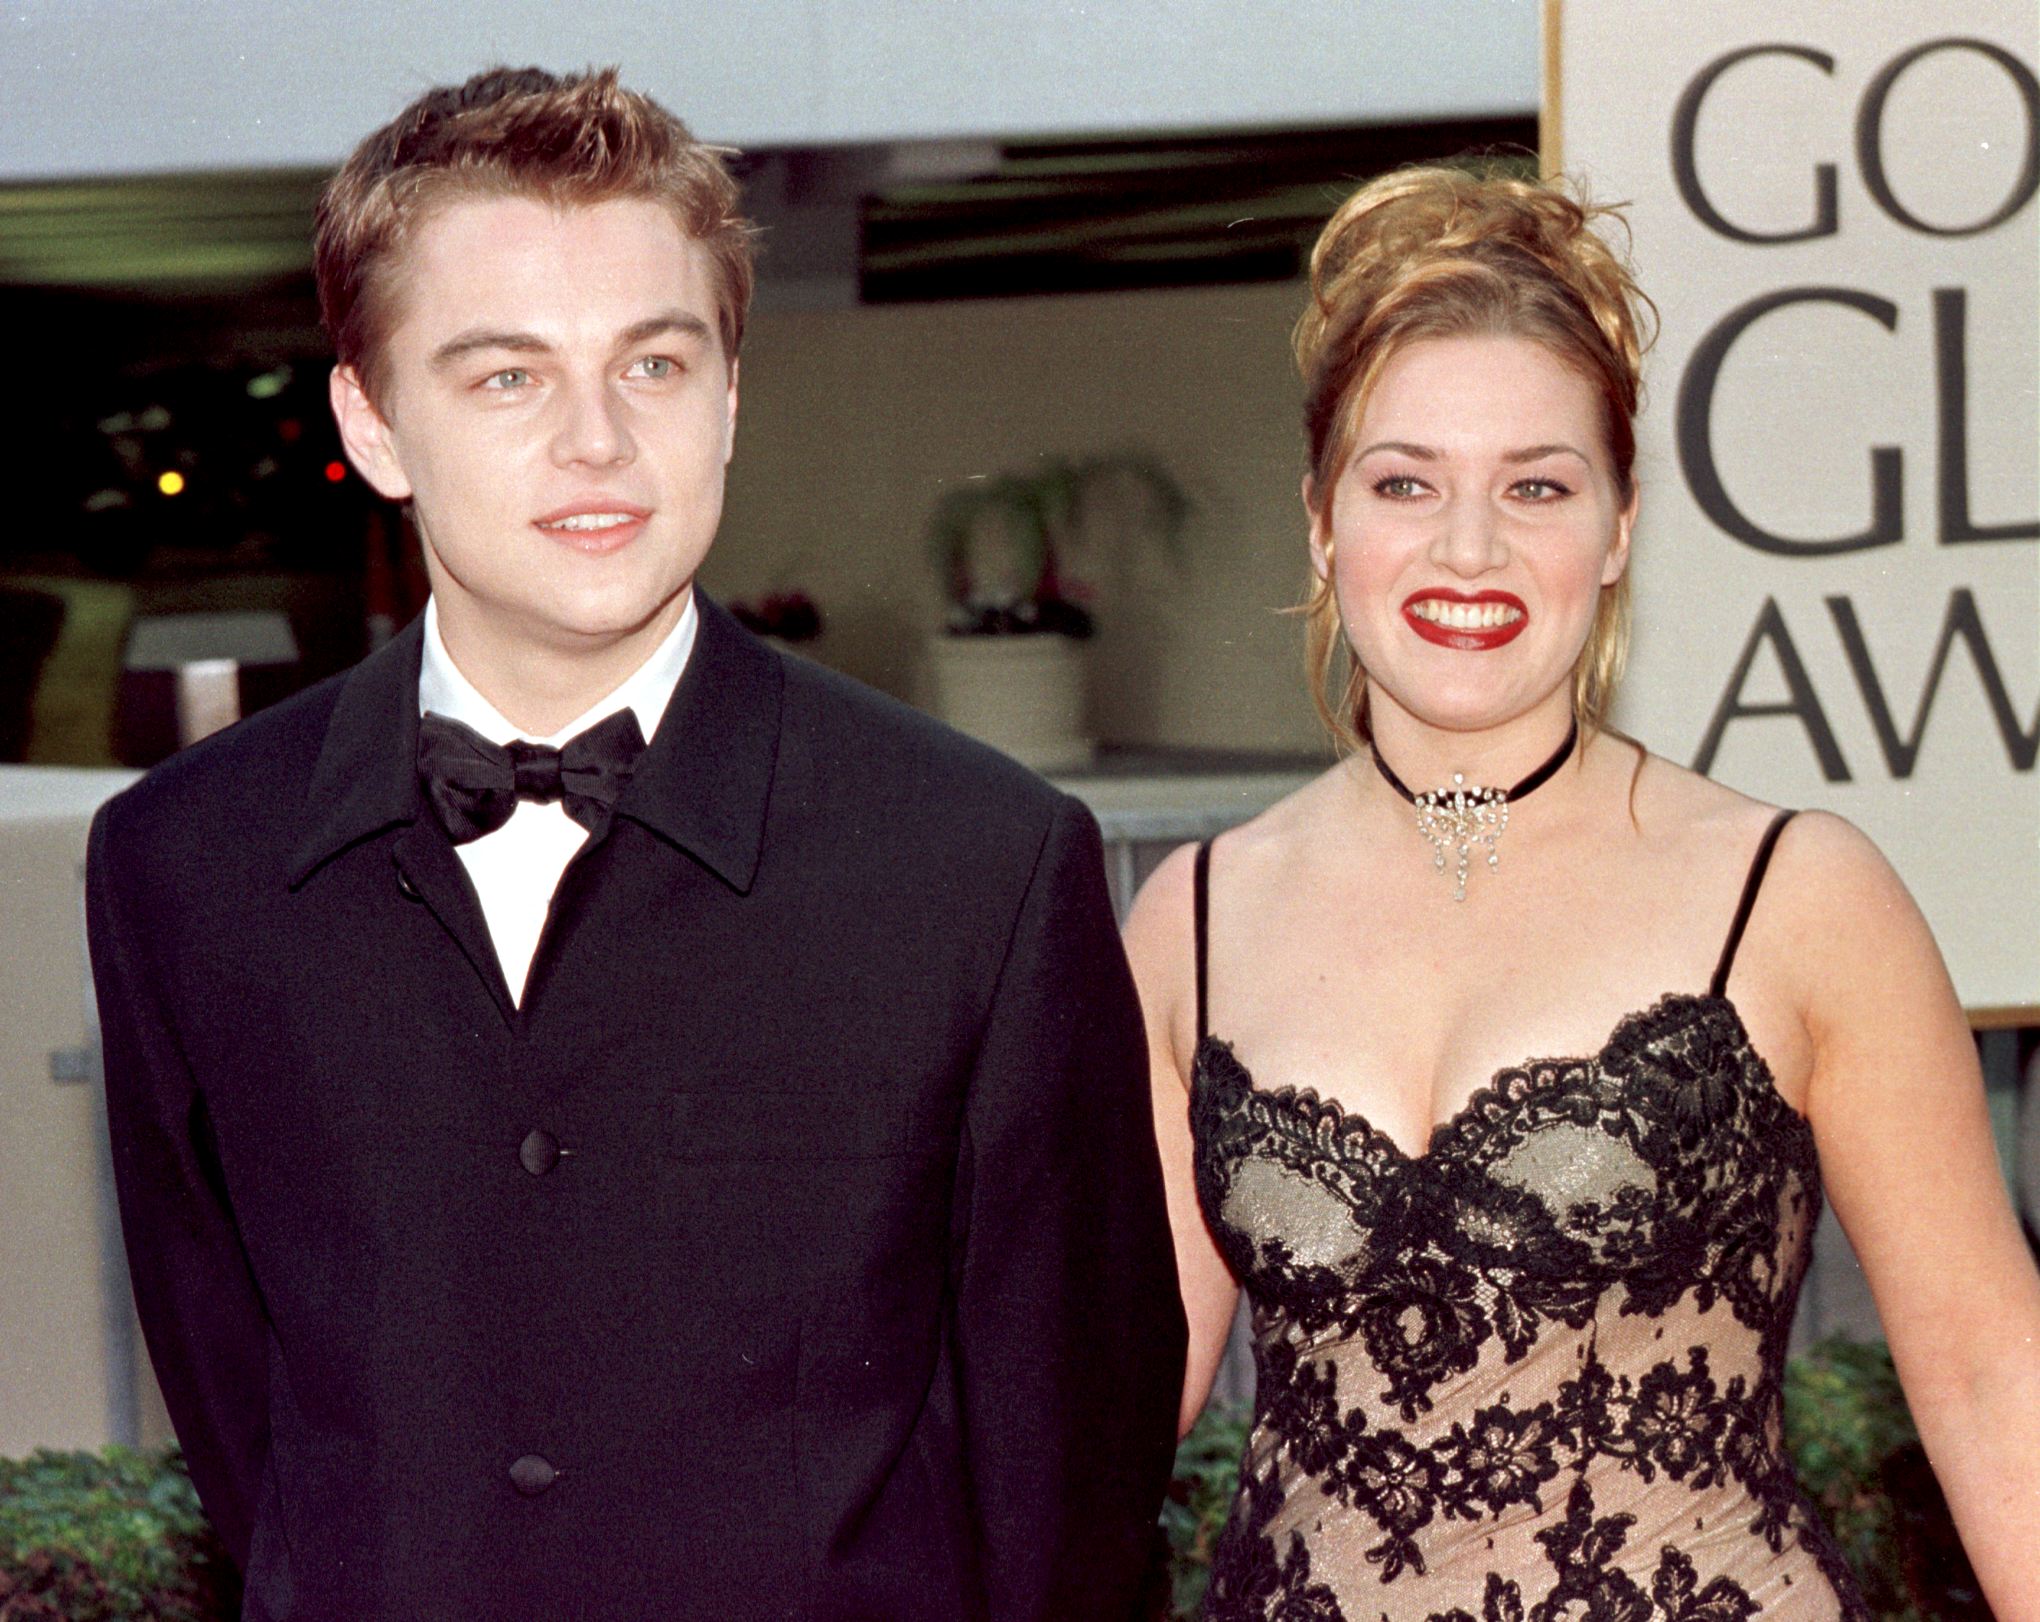 Leonardo DiCaprio at the Golden Globe Awards in 1998. (HAL GARB—AFP/Getty Images)